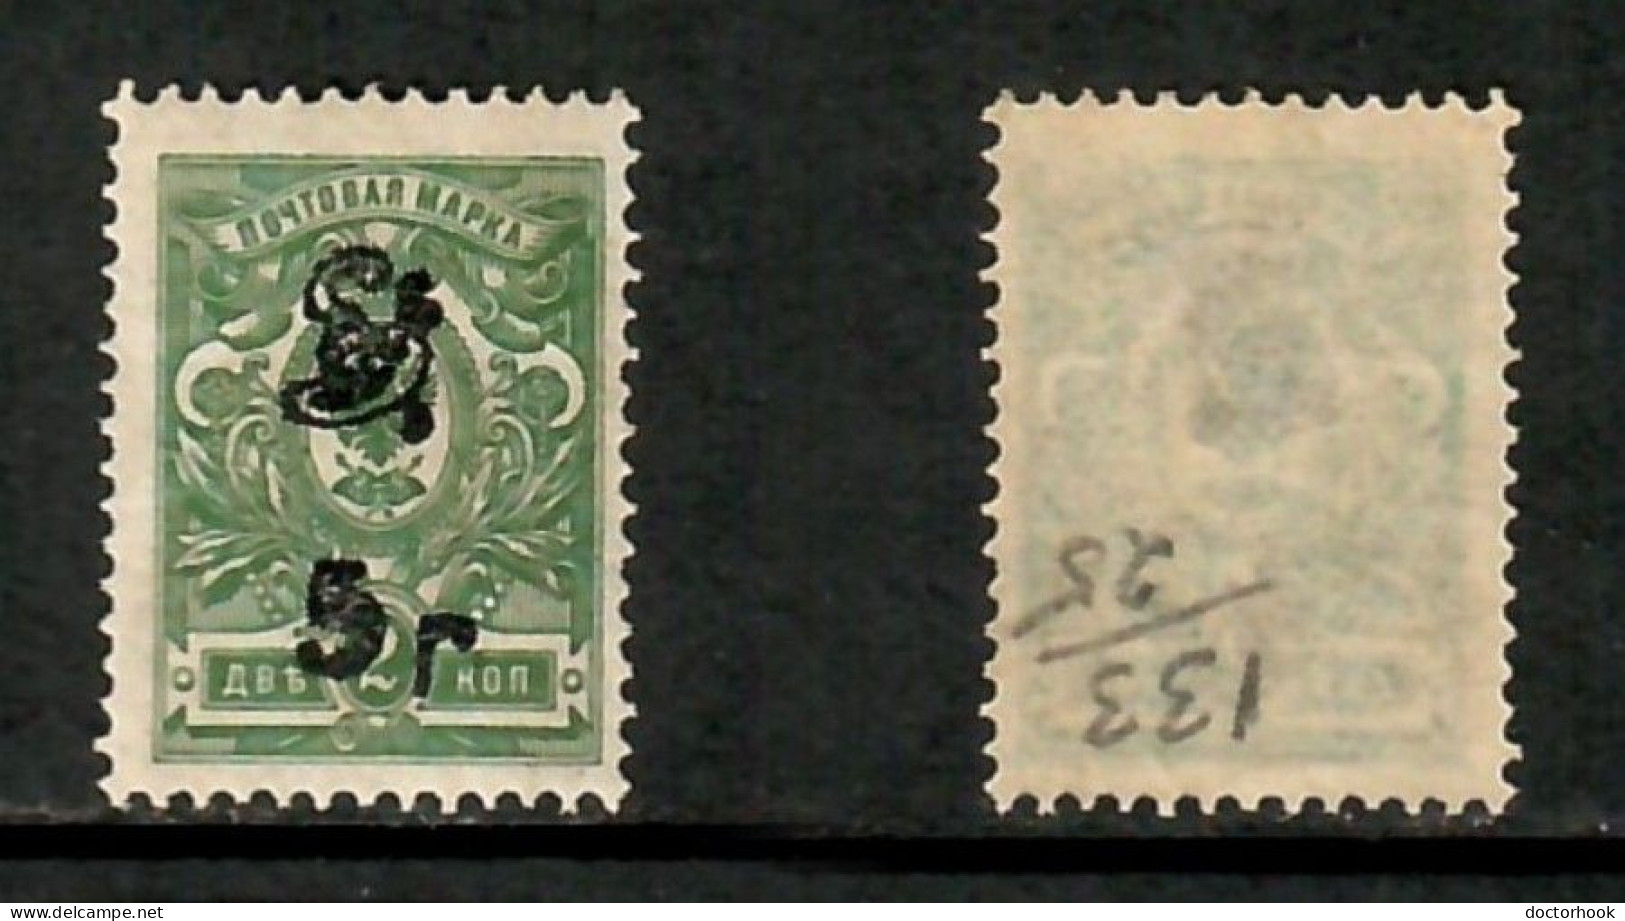 ARMENIA    Scott # 133a* MINT LH (CONDITION PER SCAN) (Stamp Scan # 1044-4) - Armenia